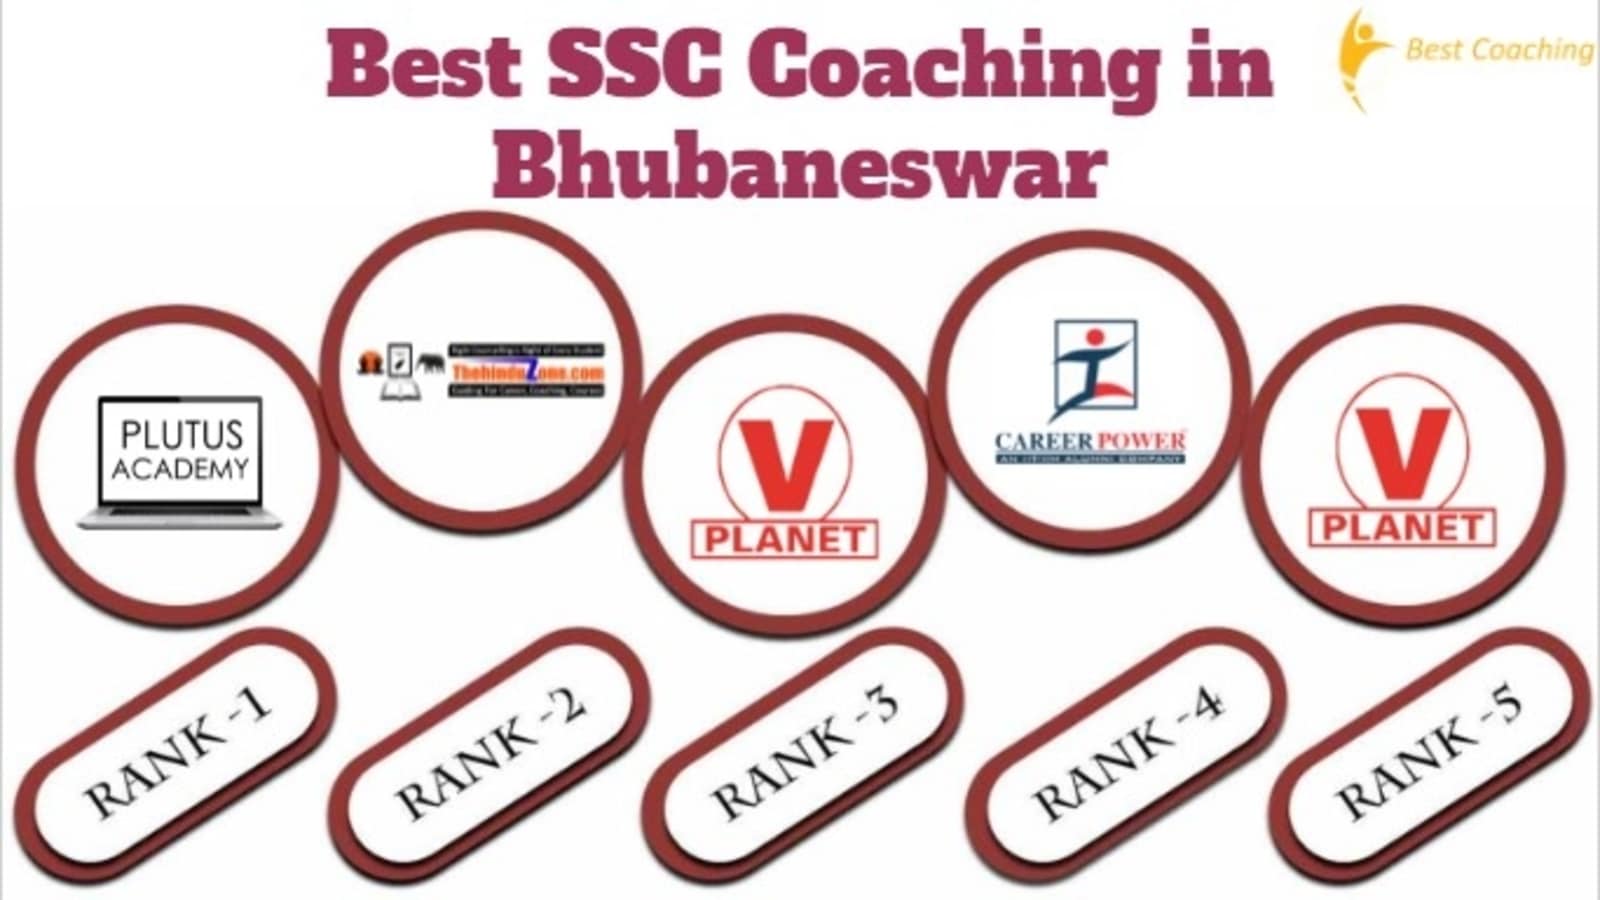 Best SSC Coaching in Bhubaneswar